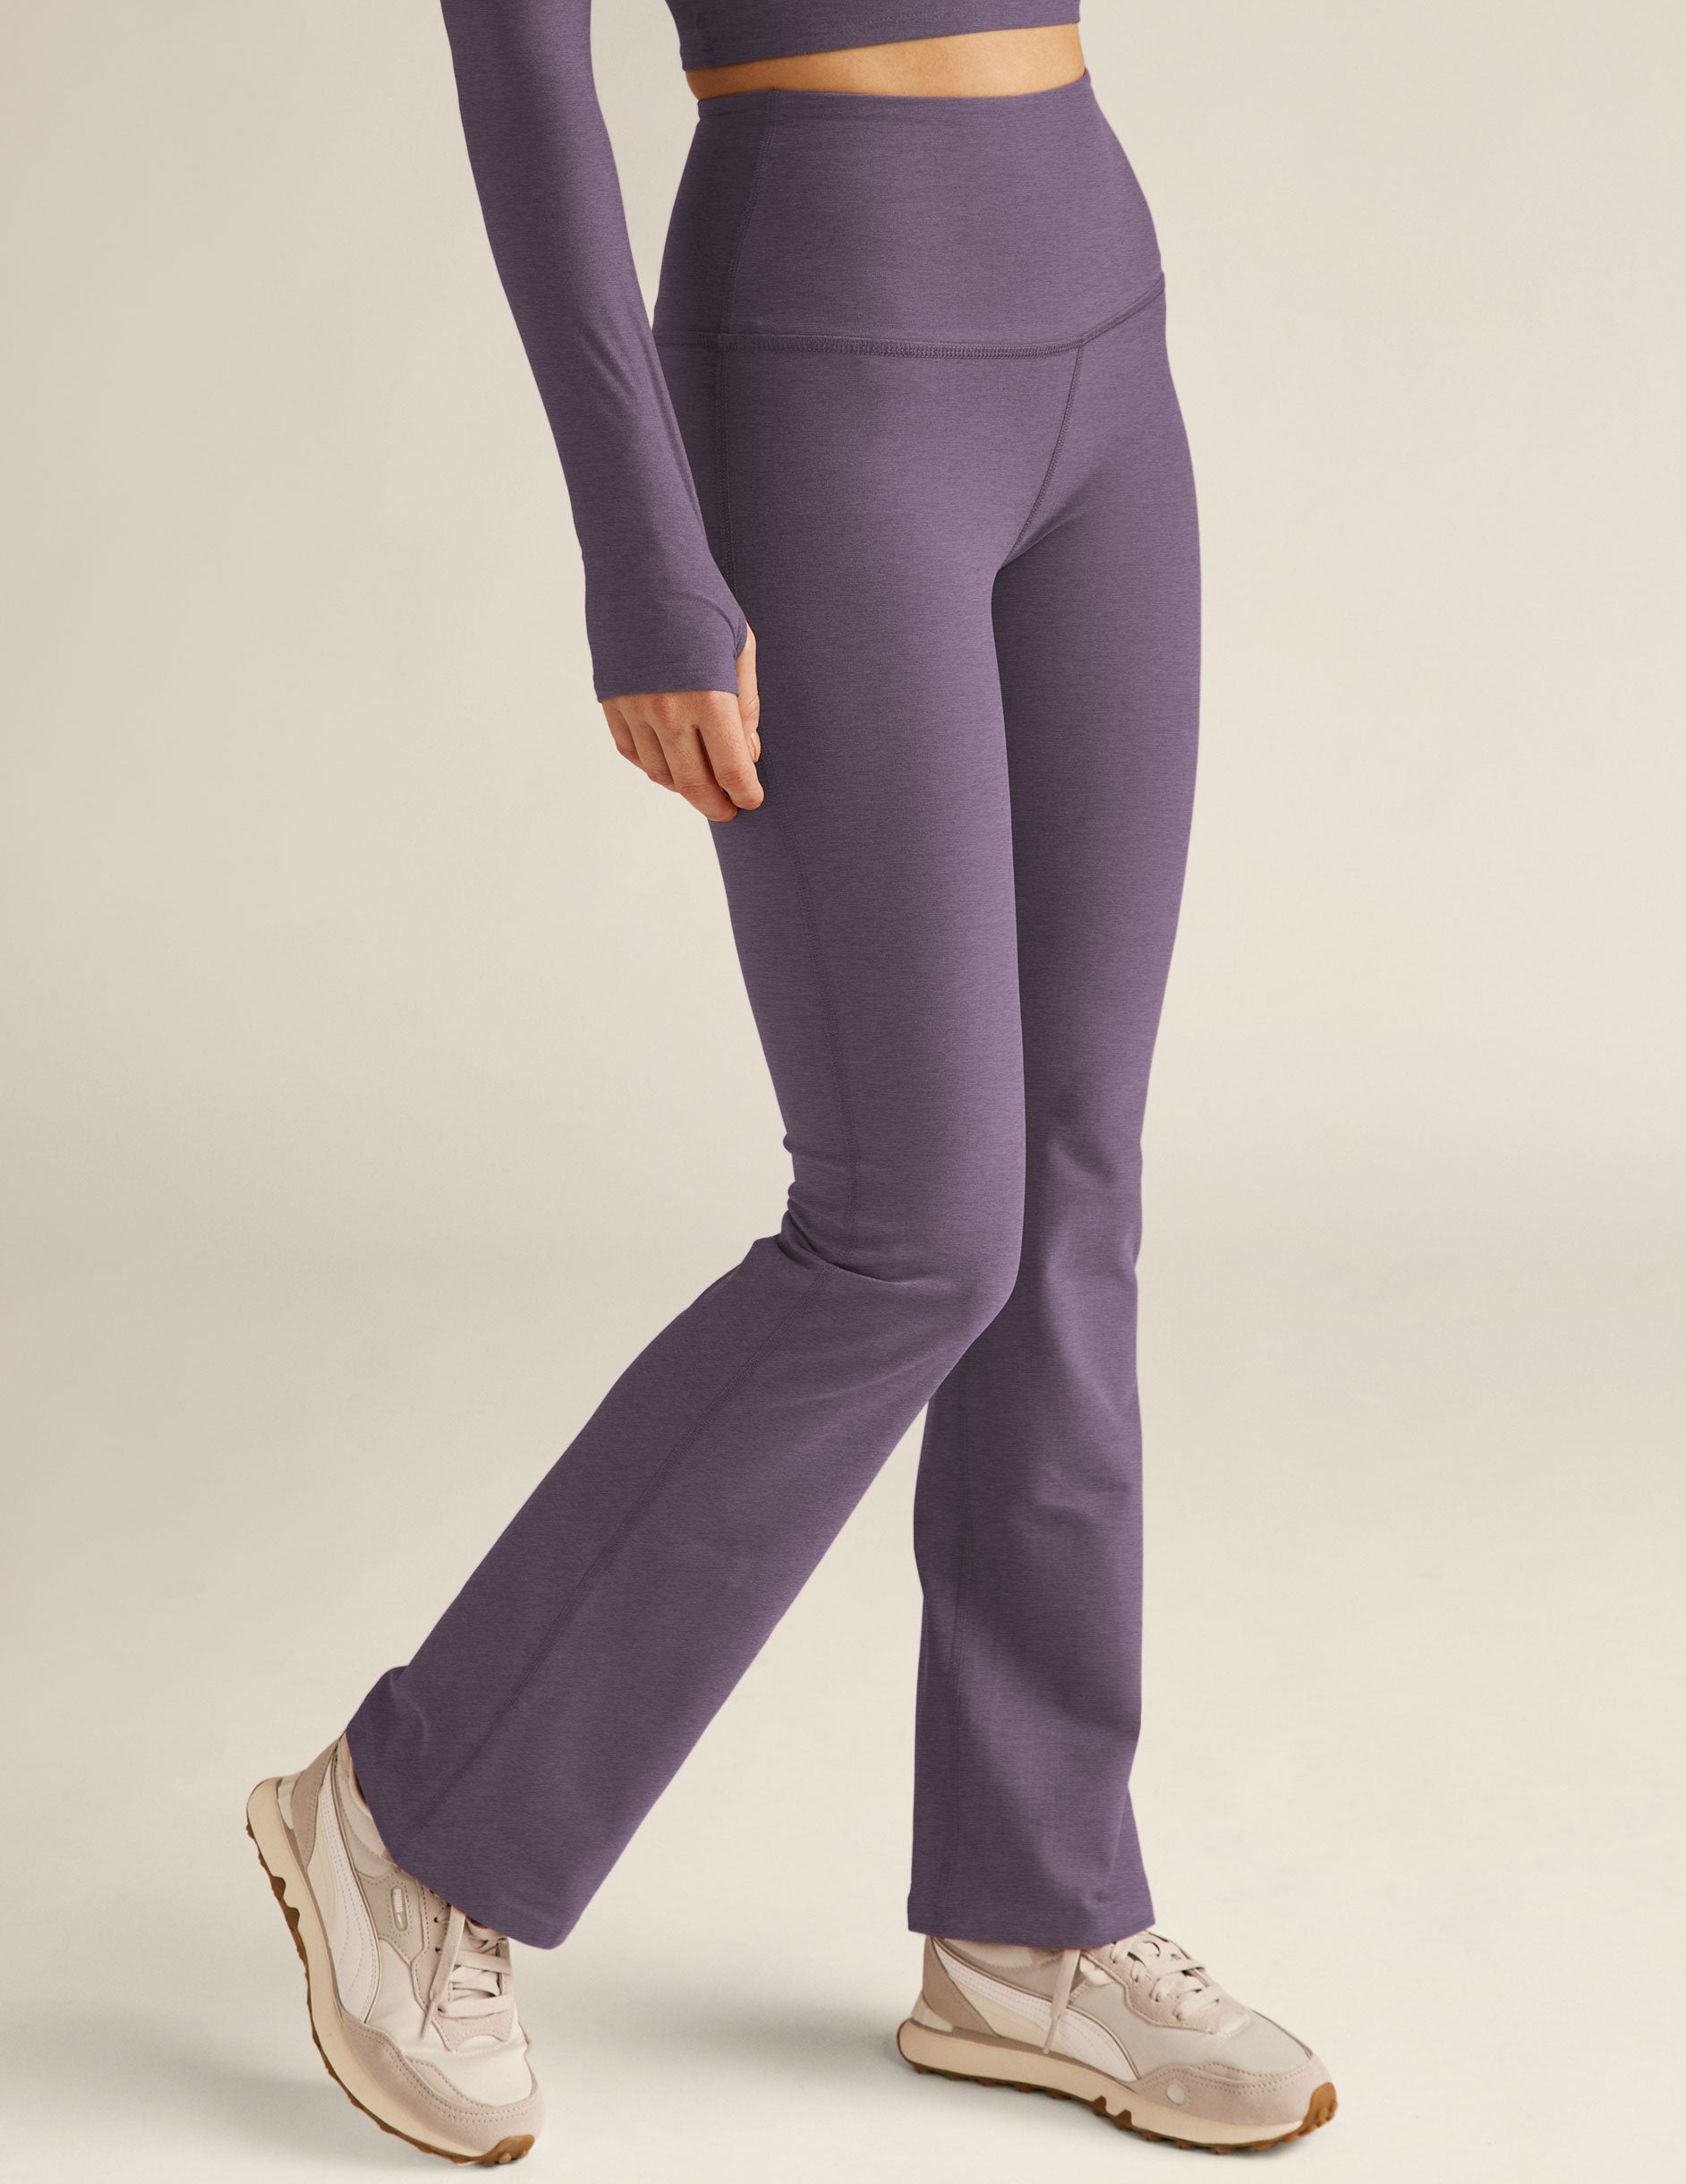 purple high-waisted bootcut pants. 